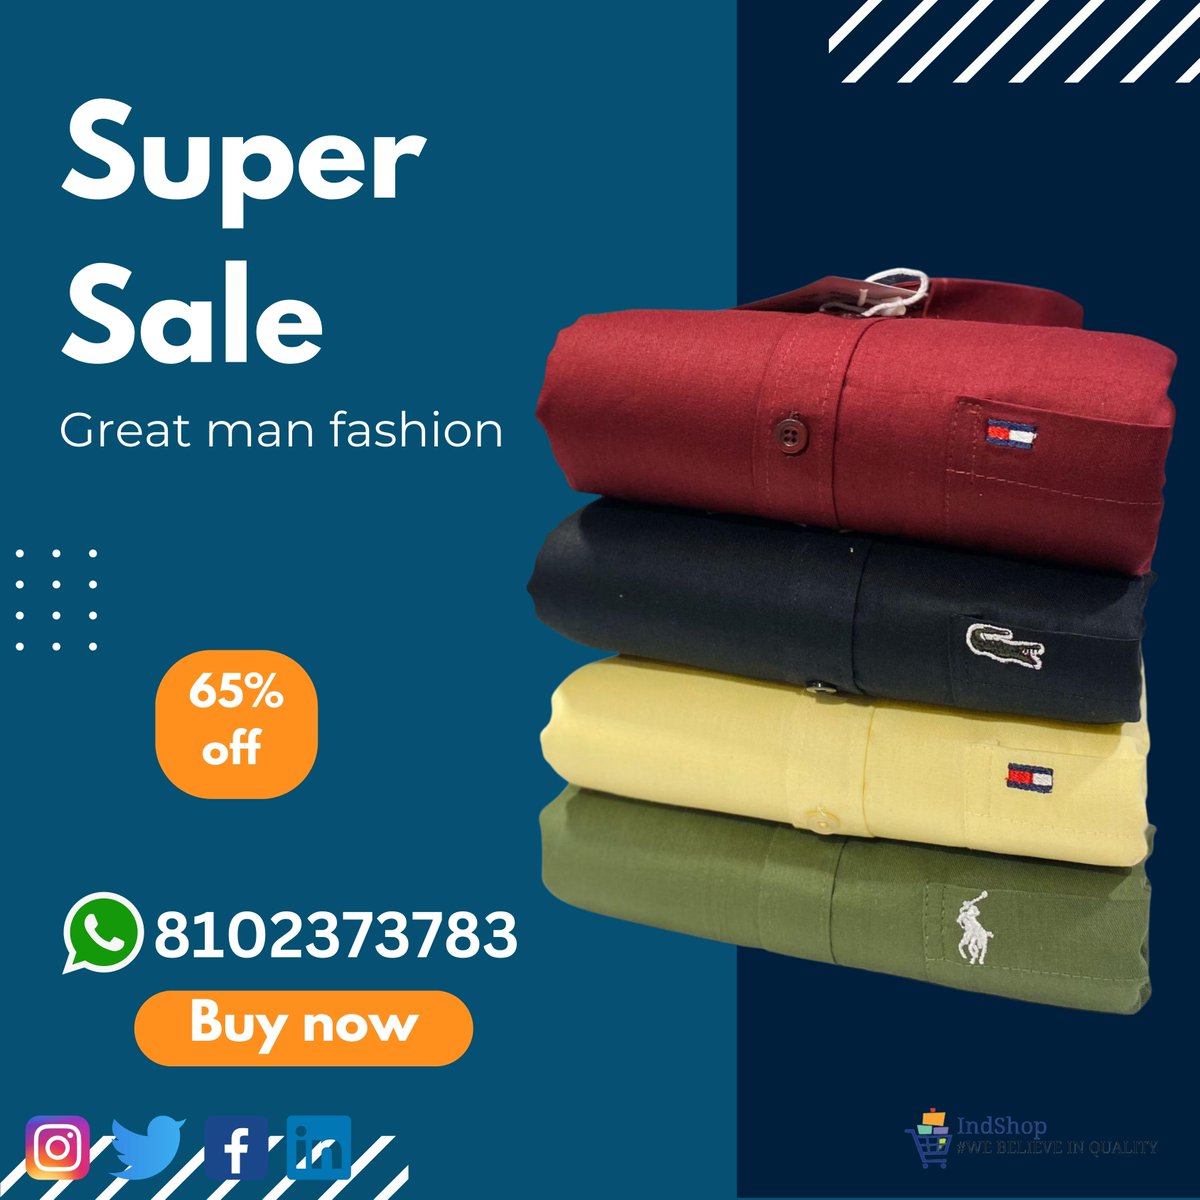 BEST MAN SHIRT | PREMIUM QUILITY | FOR MAN | 1 Pcs- Rs- 469.0 | 4 Pcs- Rs- 1399.0 | Indian tradition | Buy Now | IndShop.believe #manshirt 

#TwillCottonShirt #MensTwillShirt #ClassicShirt #MensFashion #MensStyle #EverydayEssential #WardrobeStaple #DressShirt #BusinessAttire